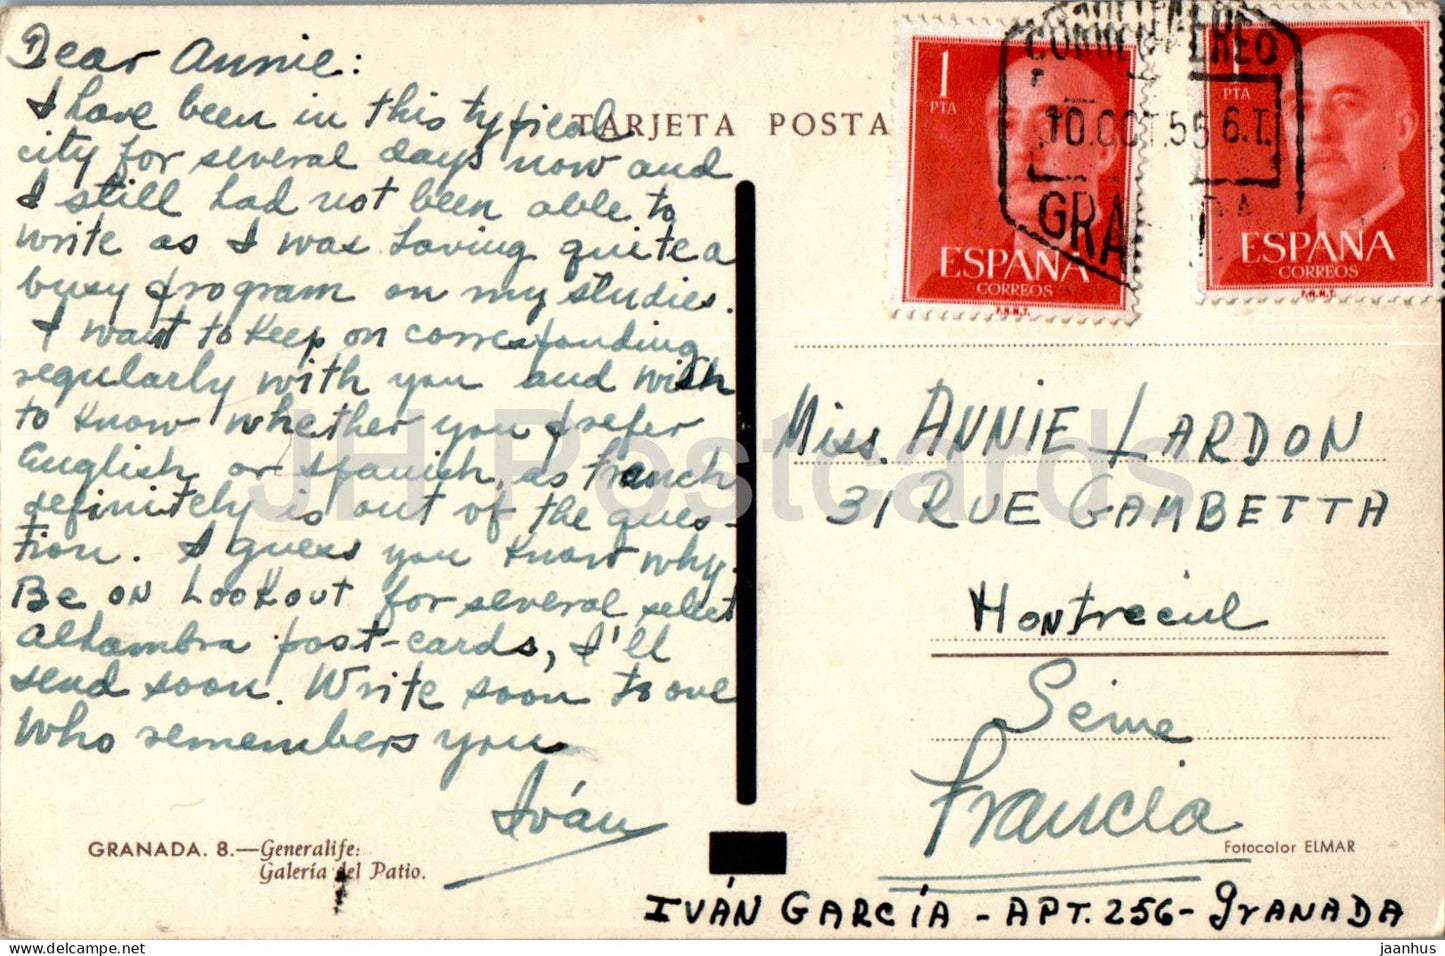 Granada - Generalife - Galeria del Patio - 8 - old postcard - 1955 - Spain - used